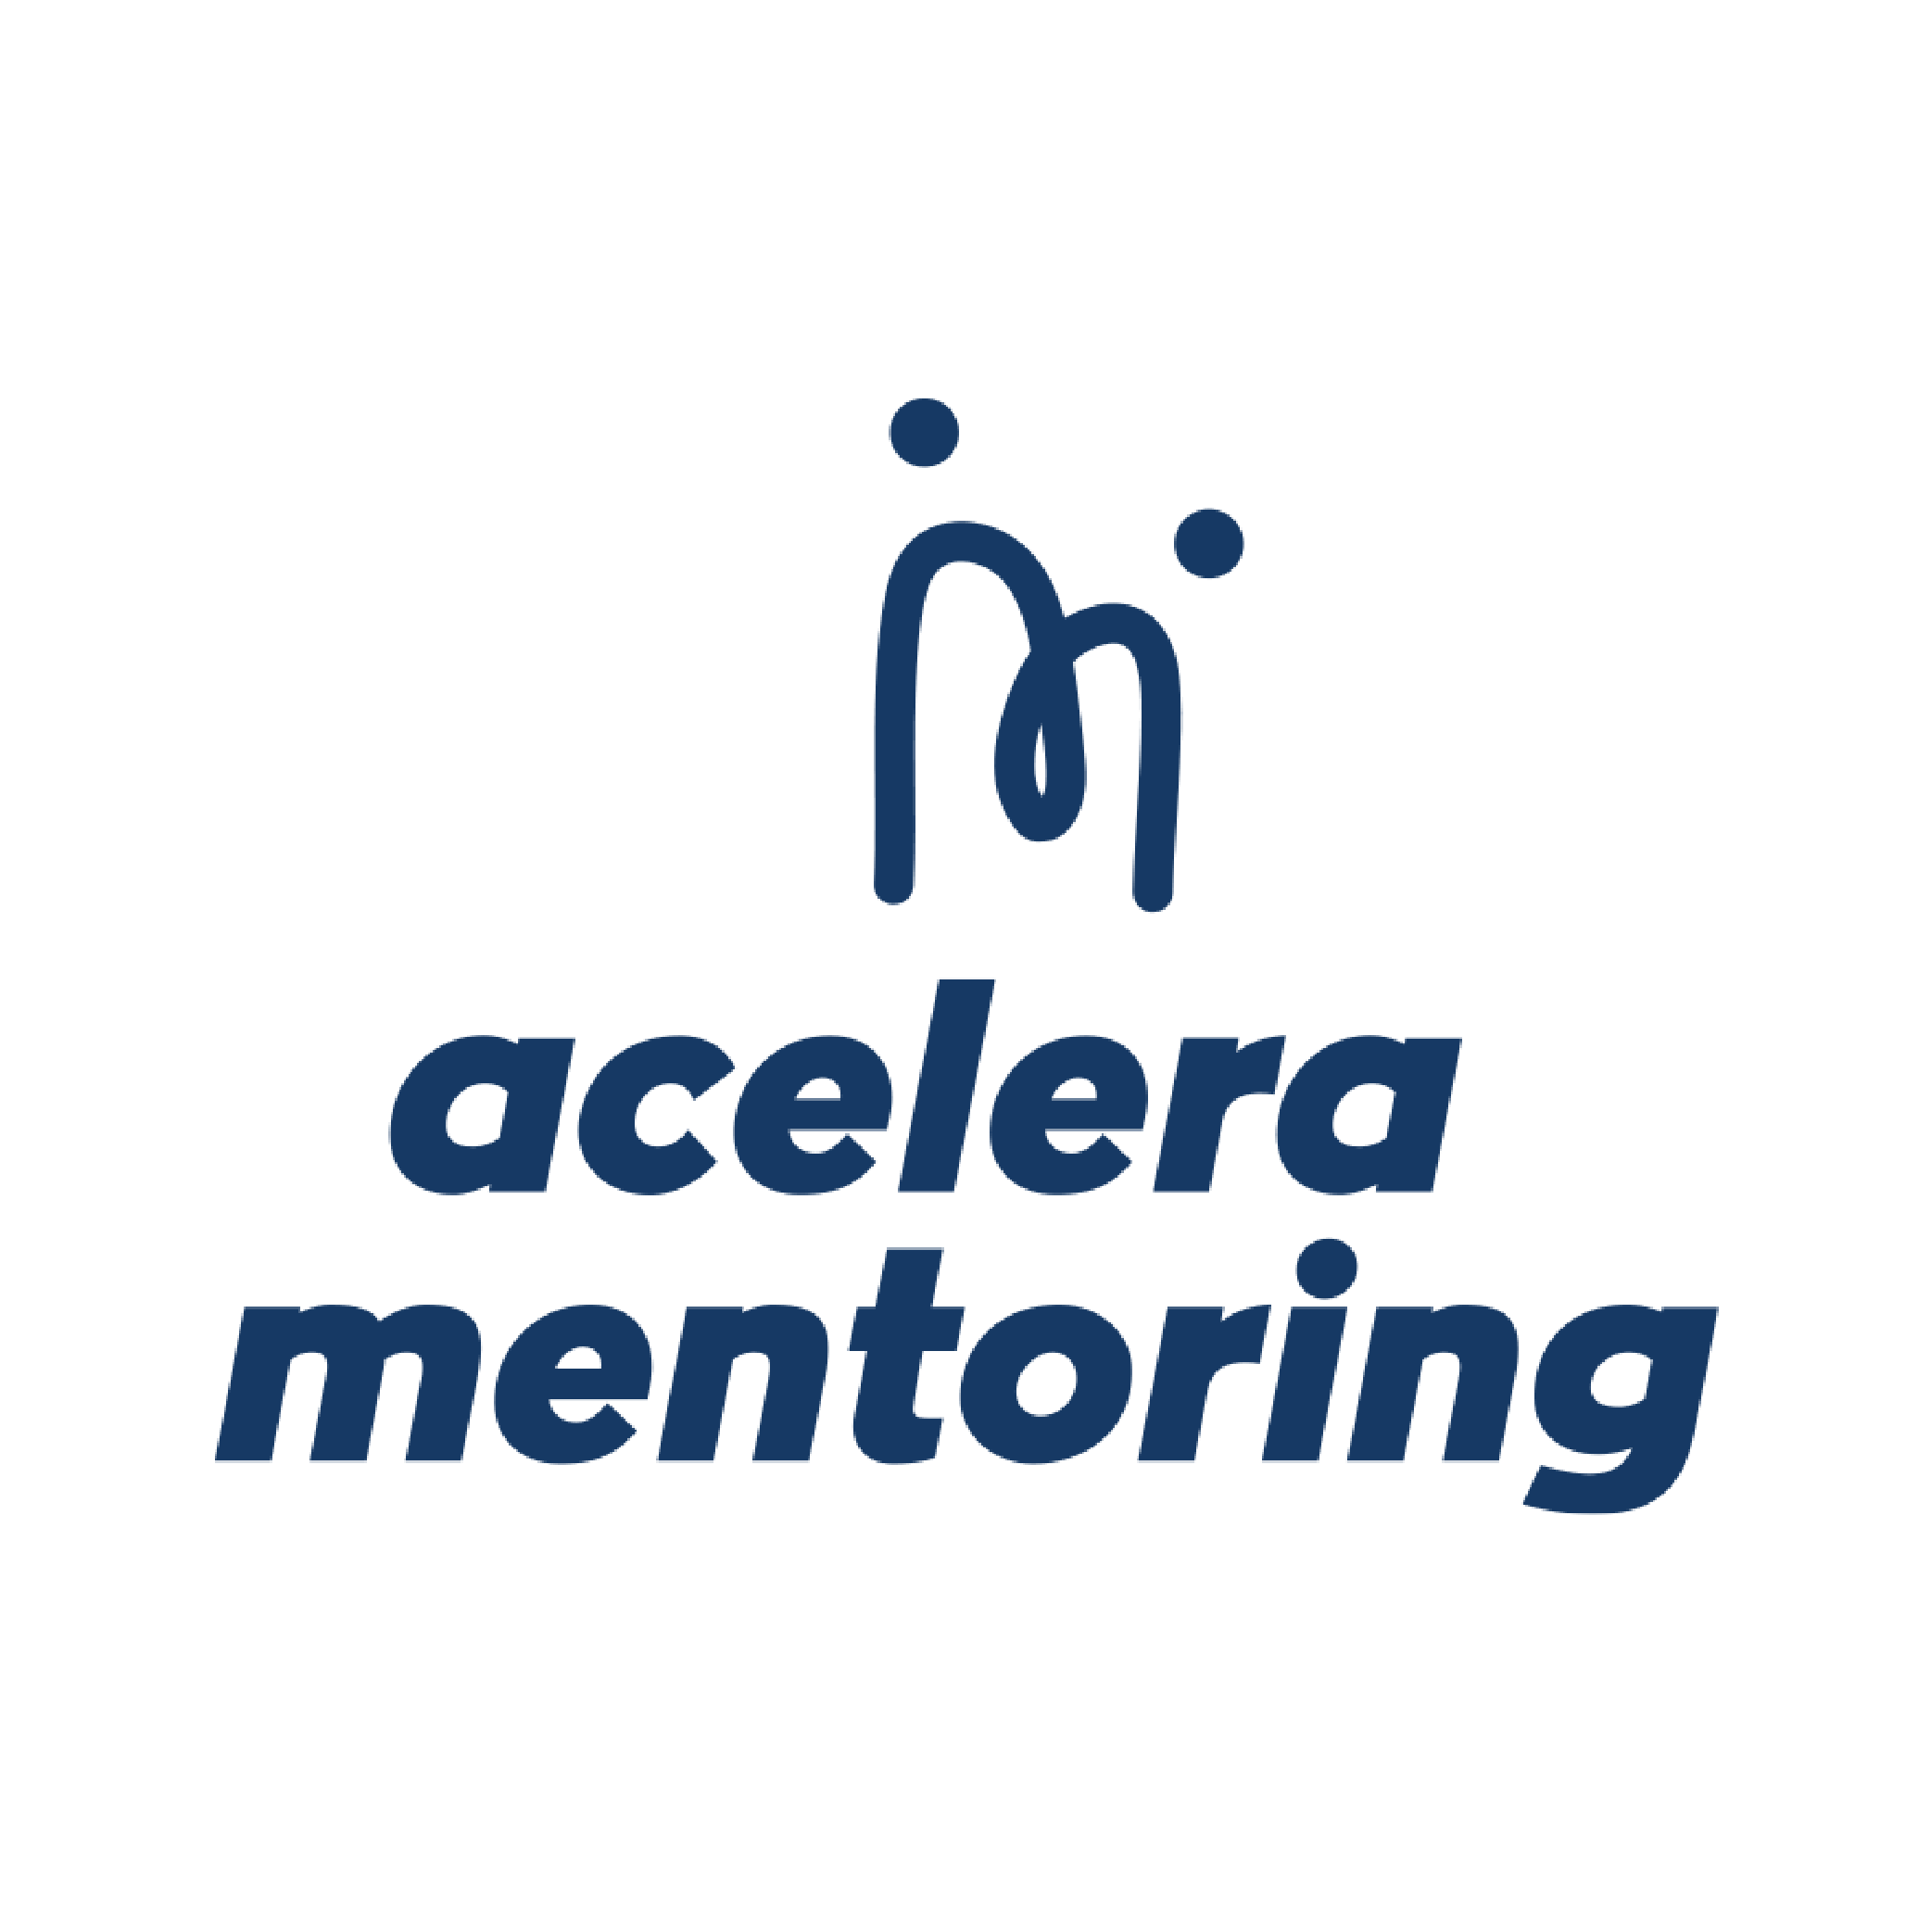 Acelera Mentoring